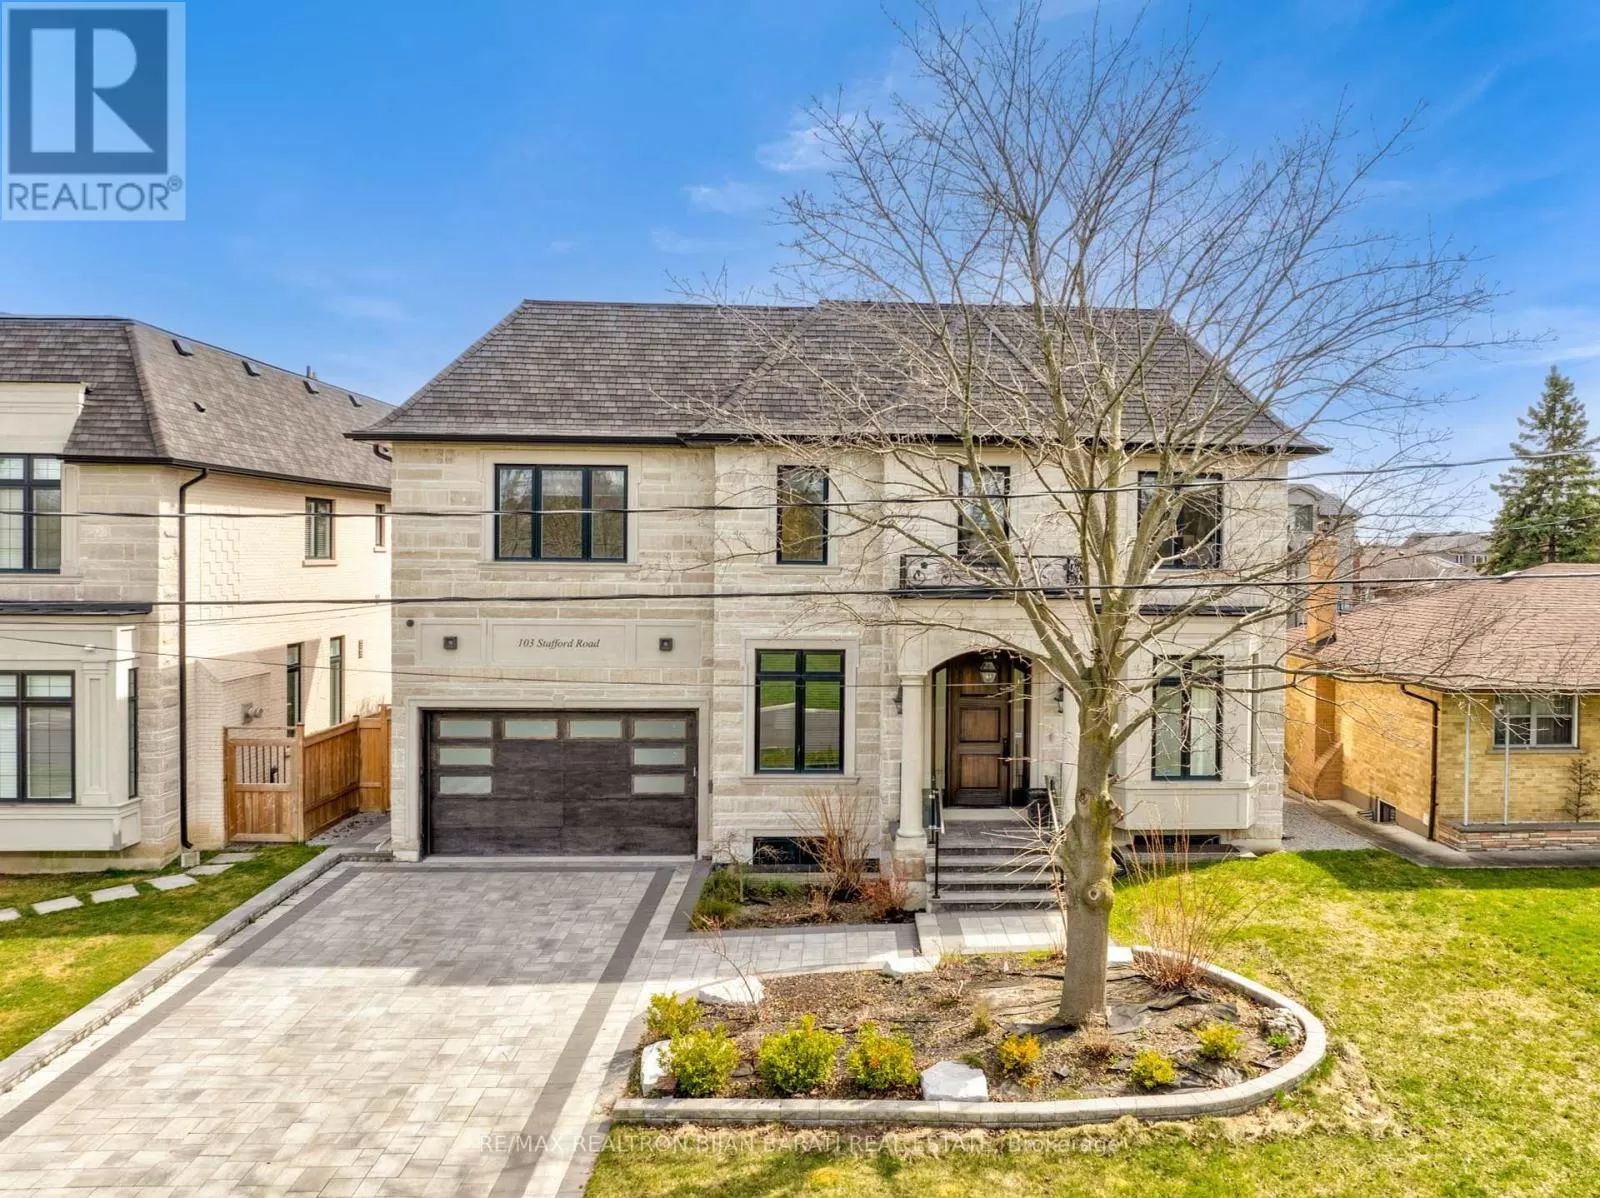 House for rent: 103 Stafford Road, Toronto, Ontario M2R 1V5